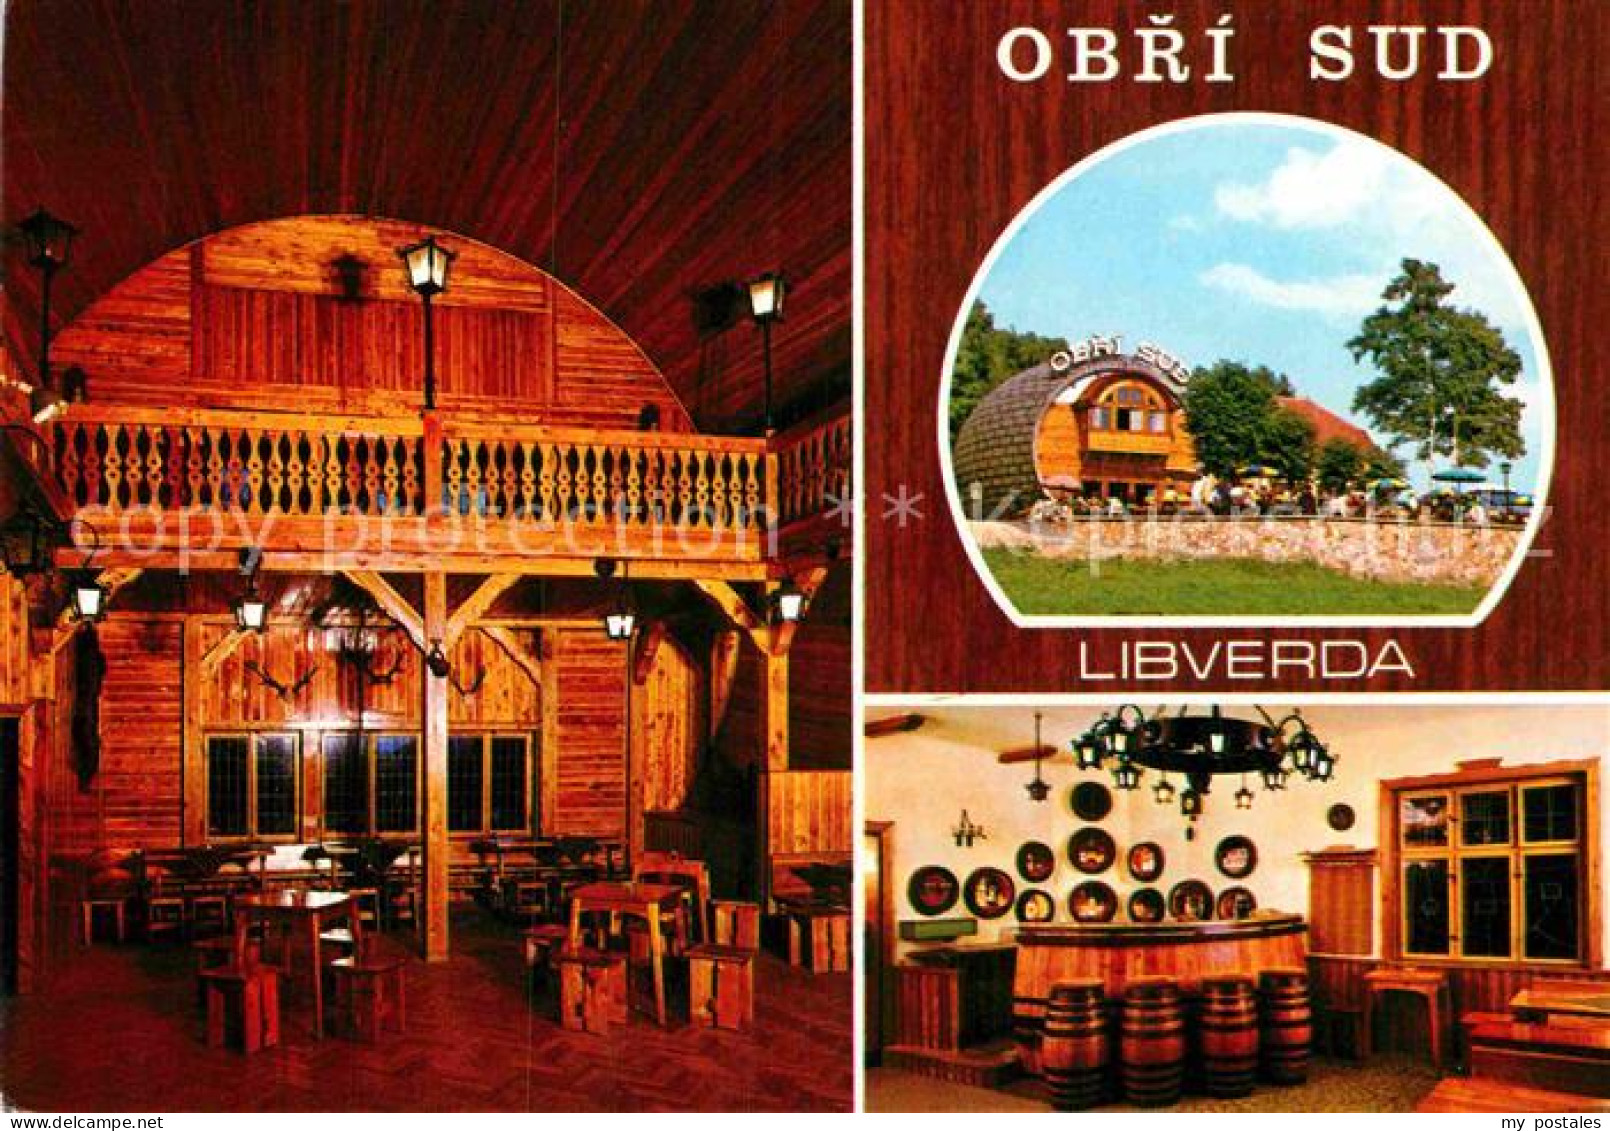 72895954 Jizerske Hory Restaurant Obri Sud Libverda Jizerske Hory - Czech Republic